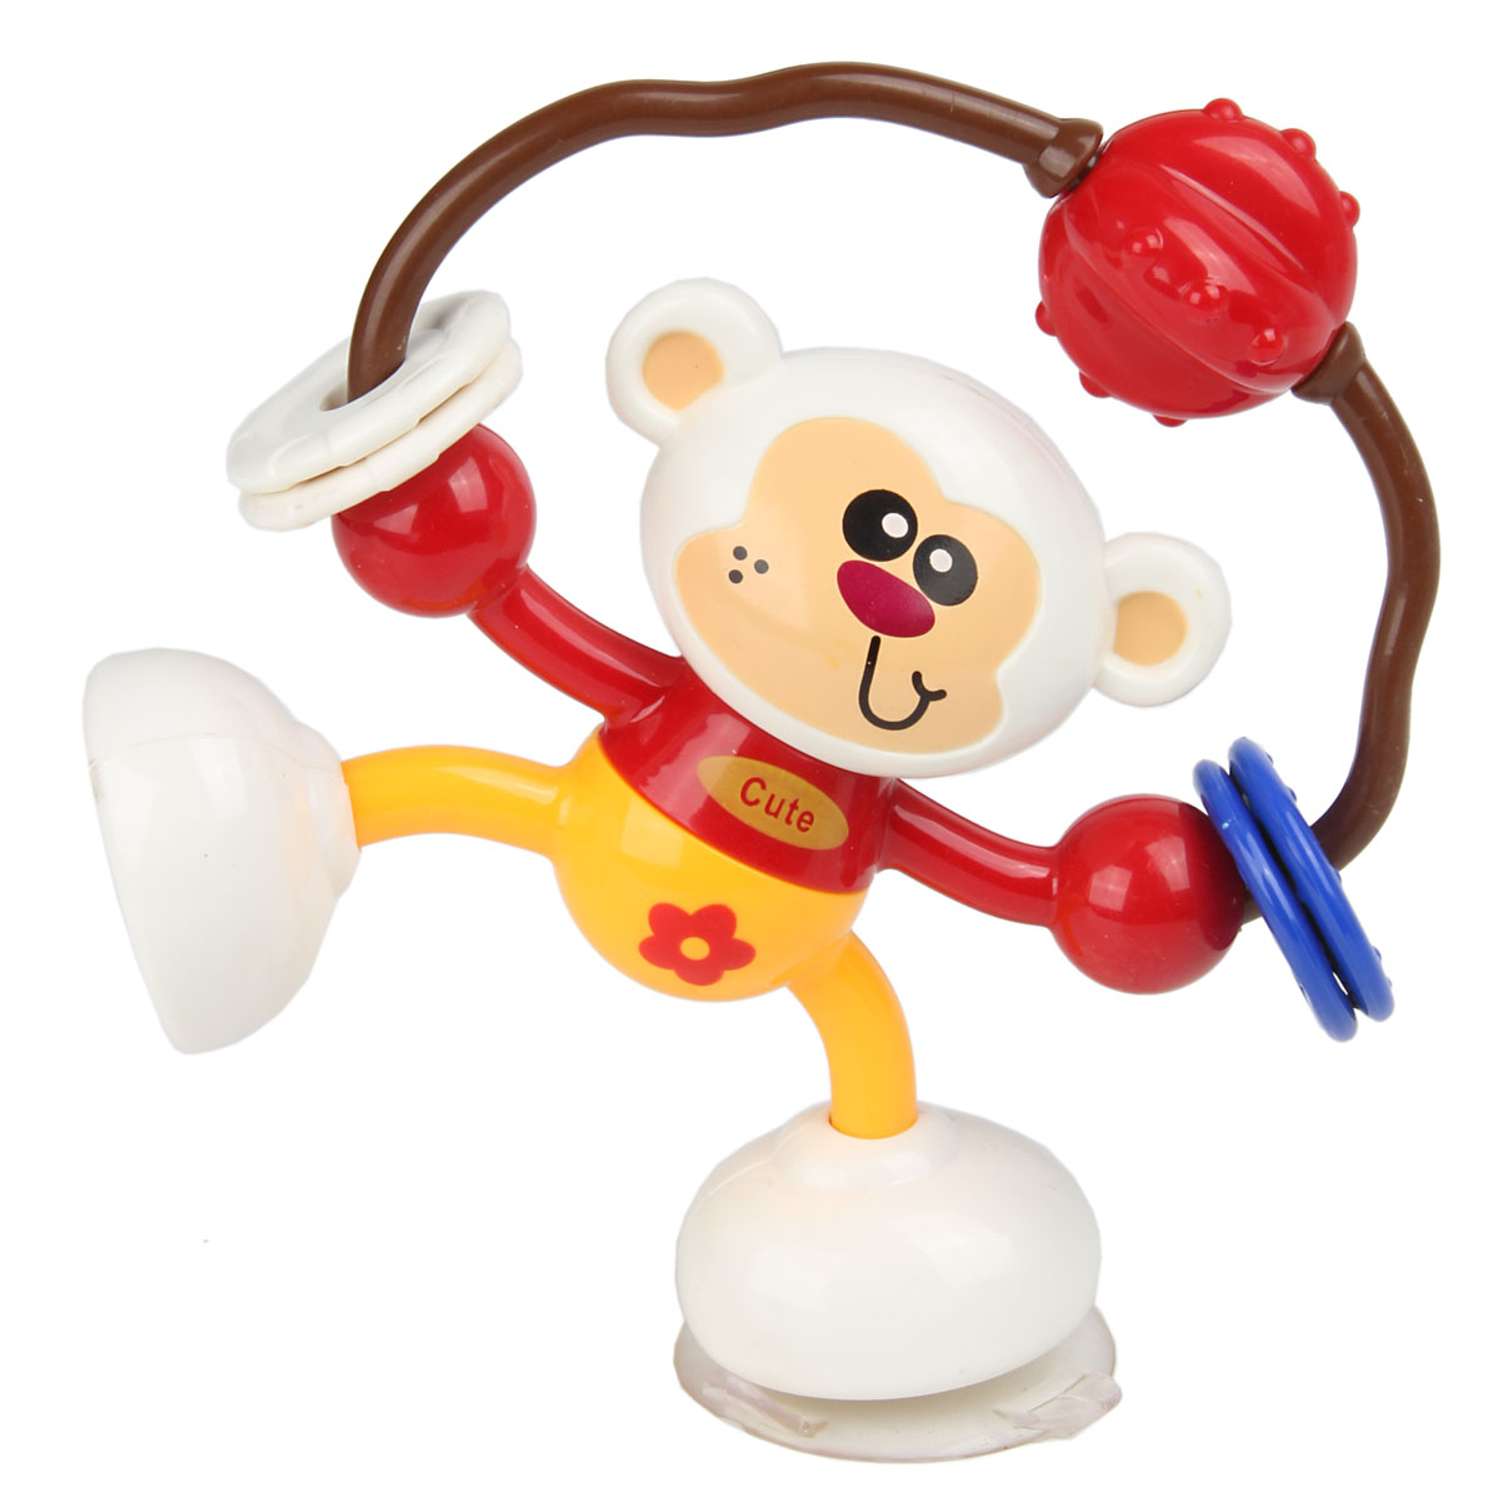 Развивающая игрушка Ути Пути обезьянка крутилка - фото 1